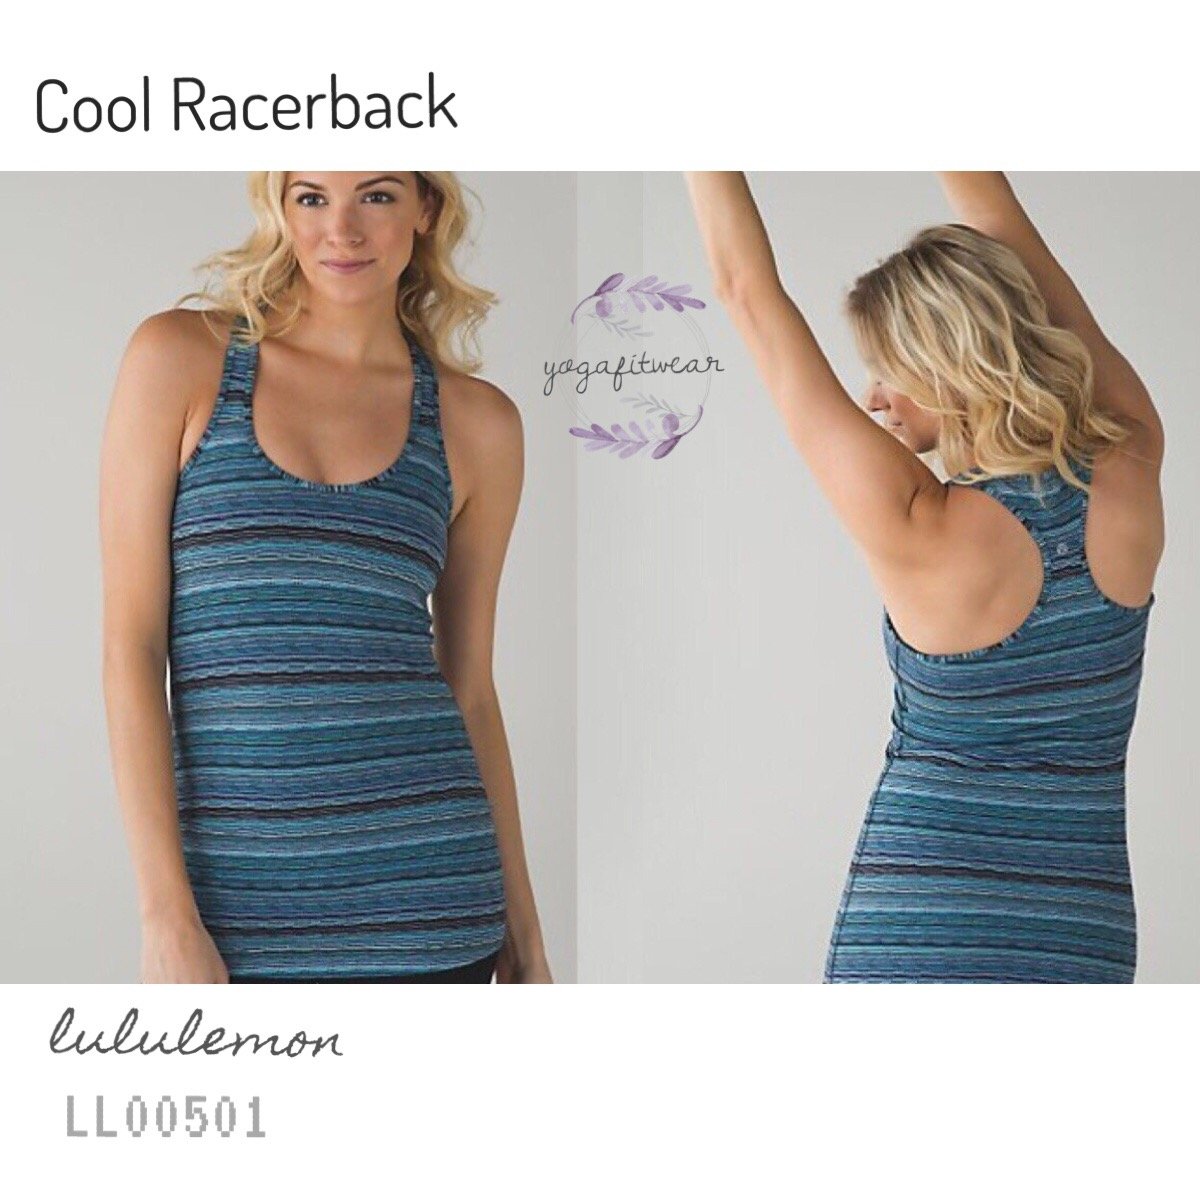 Lululemon - Cool Racerback (Space Dye Twist Naval Blue Peacock Blue) (LL00501)